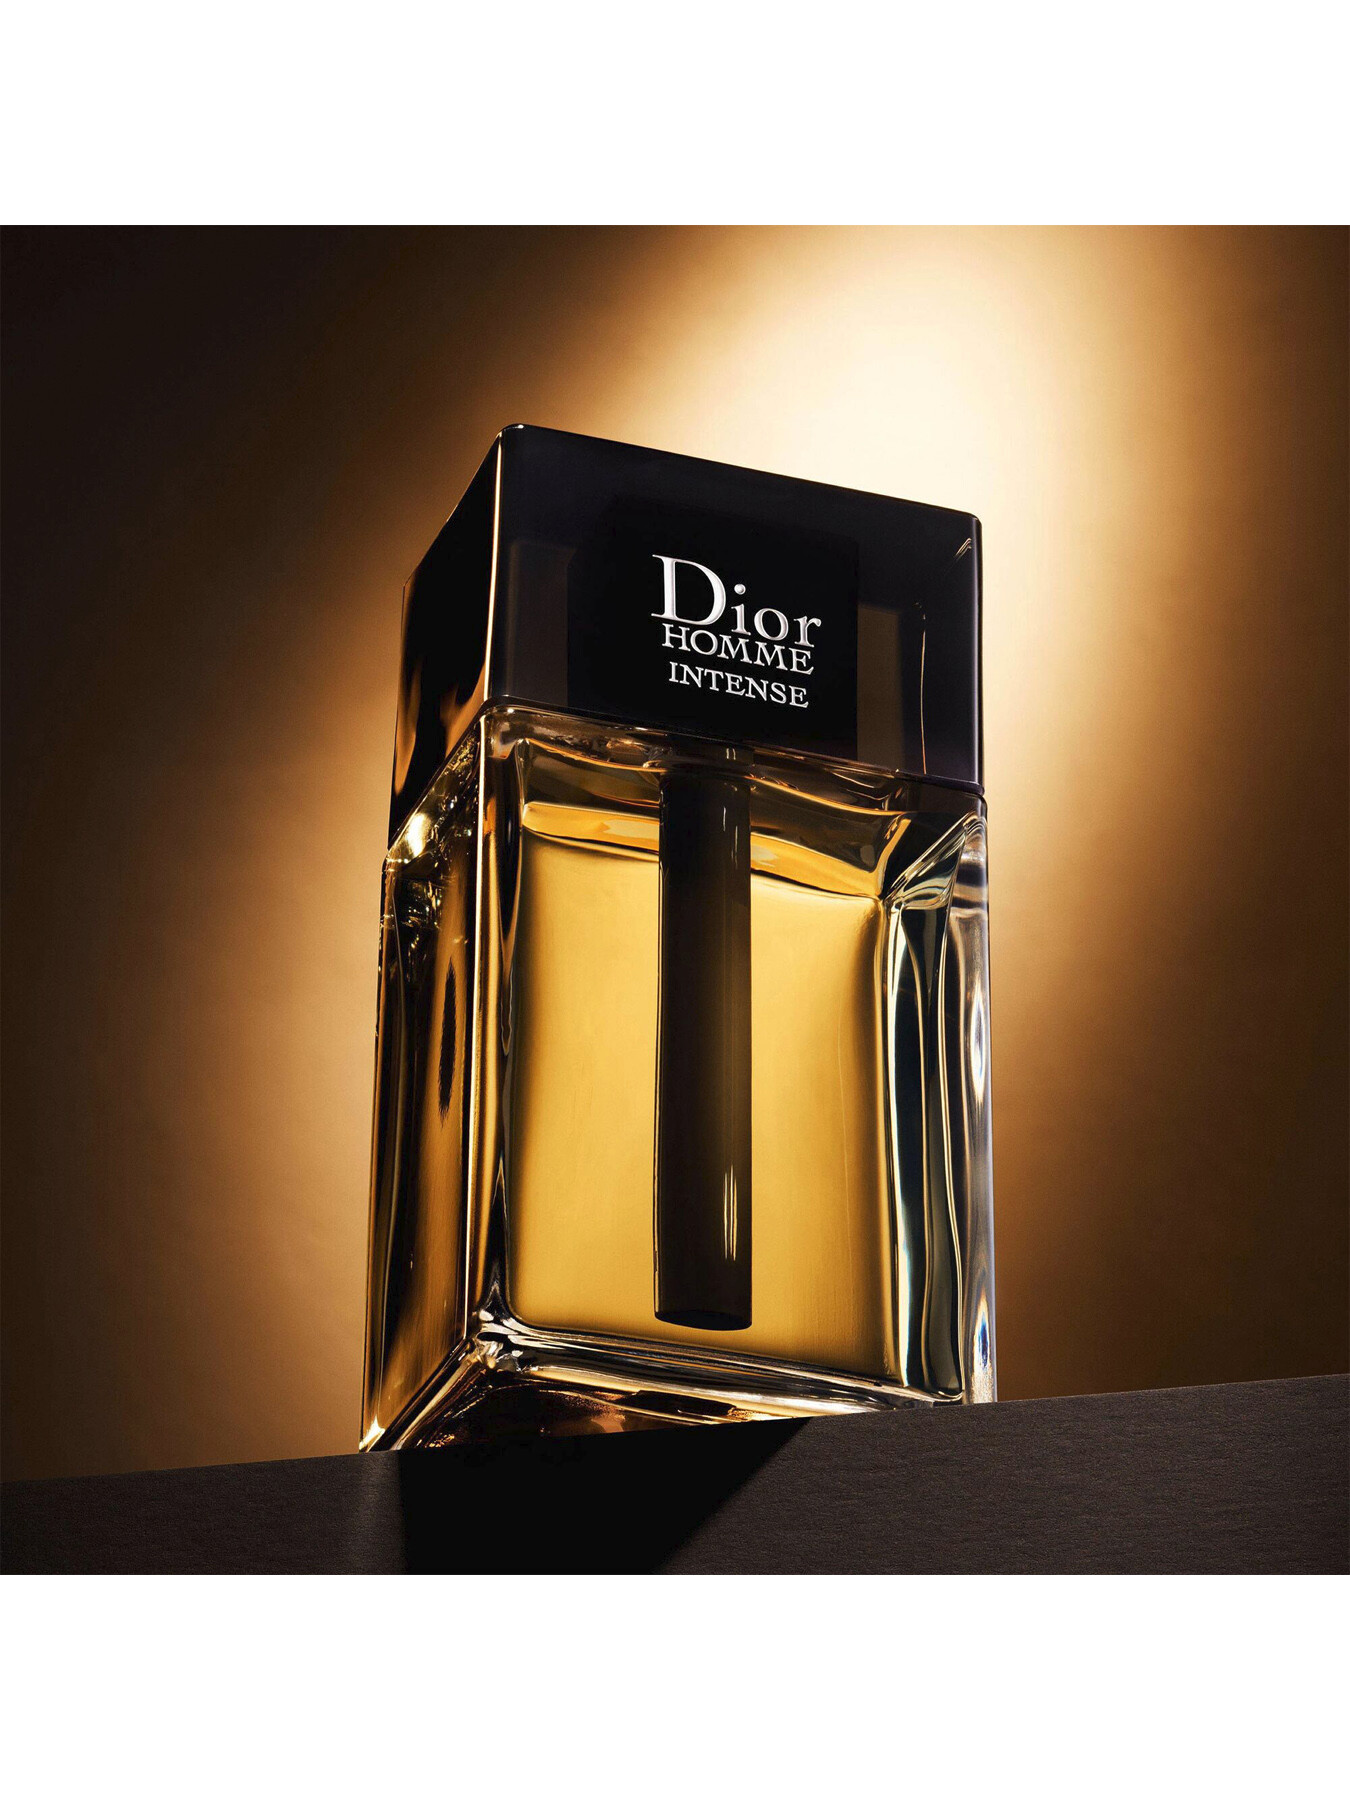 DIOR Dior Homme Intense Eau de Parfum Intense 150ml | Fenwick